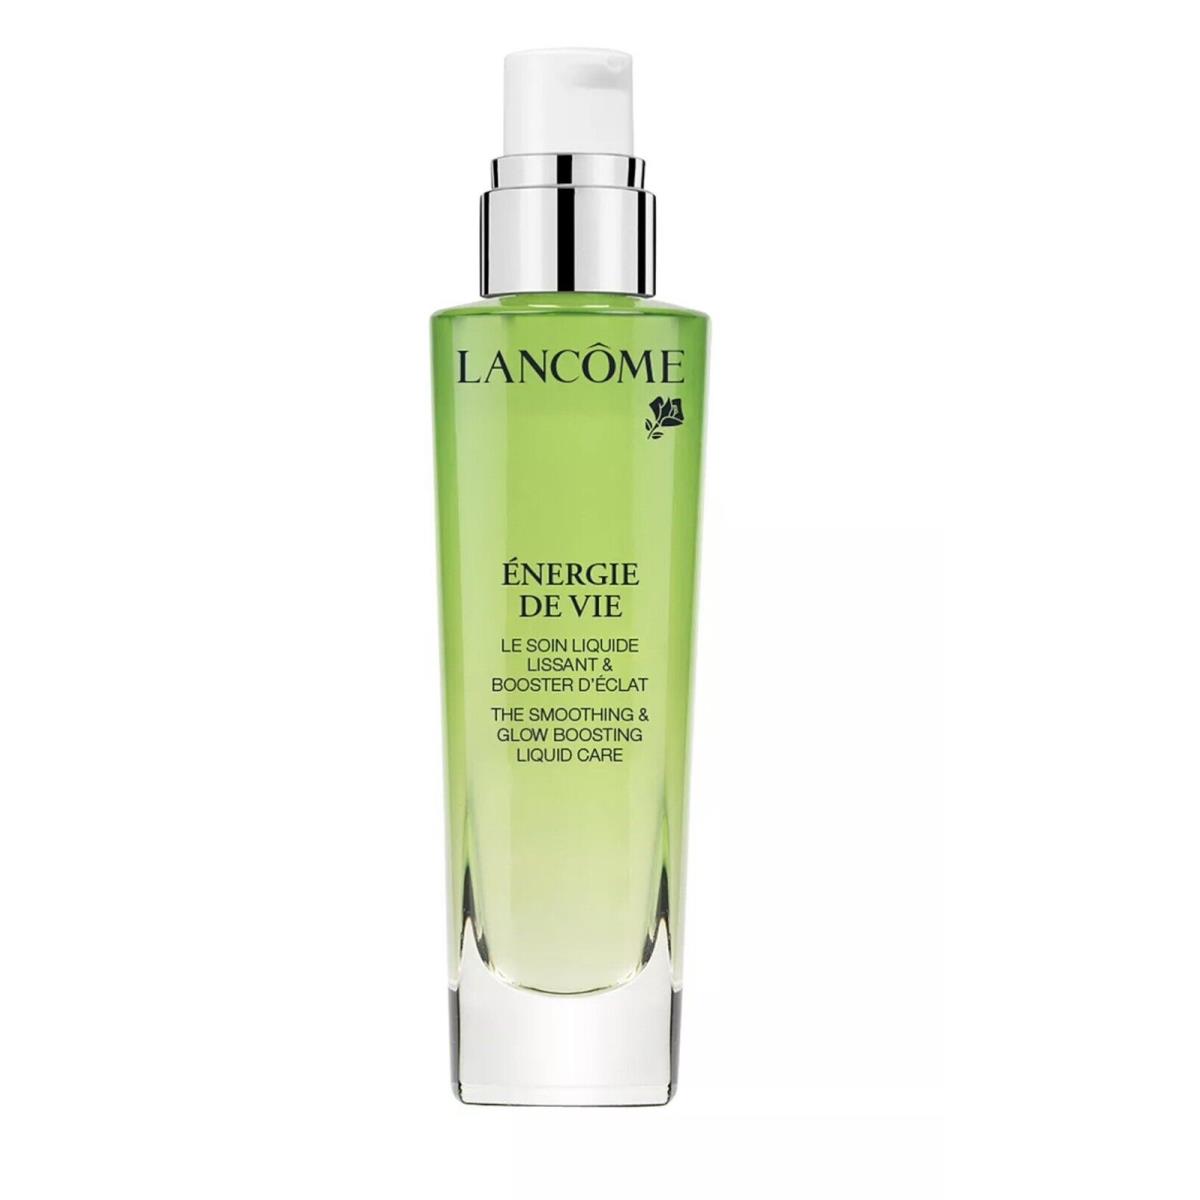 Lancome Energie De Vie The Antioxidant Anti-fatigue Liquid Skin Care 1.69fl.oz